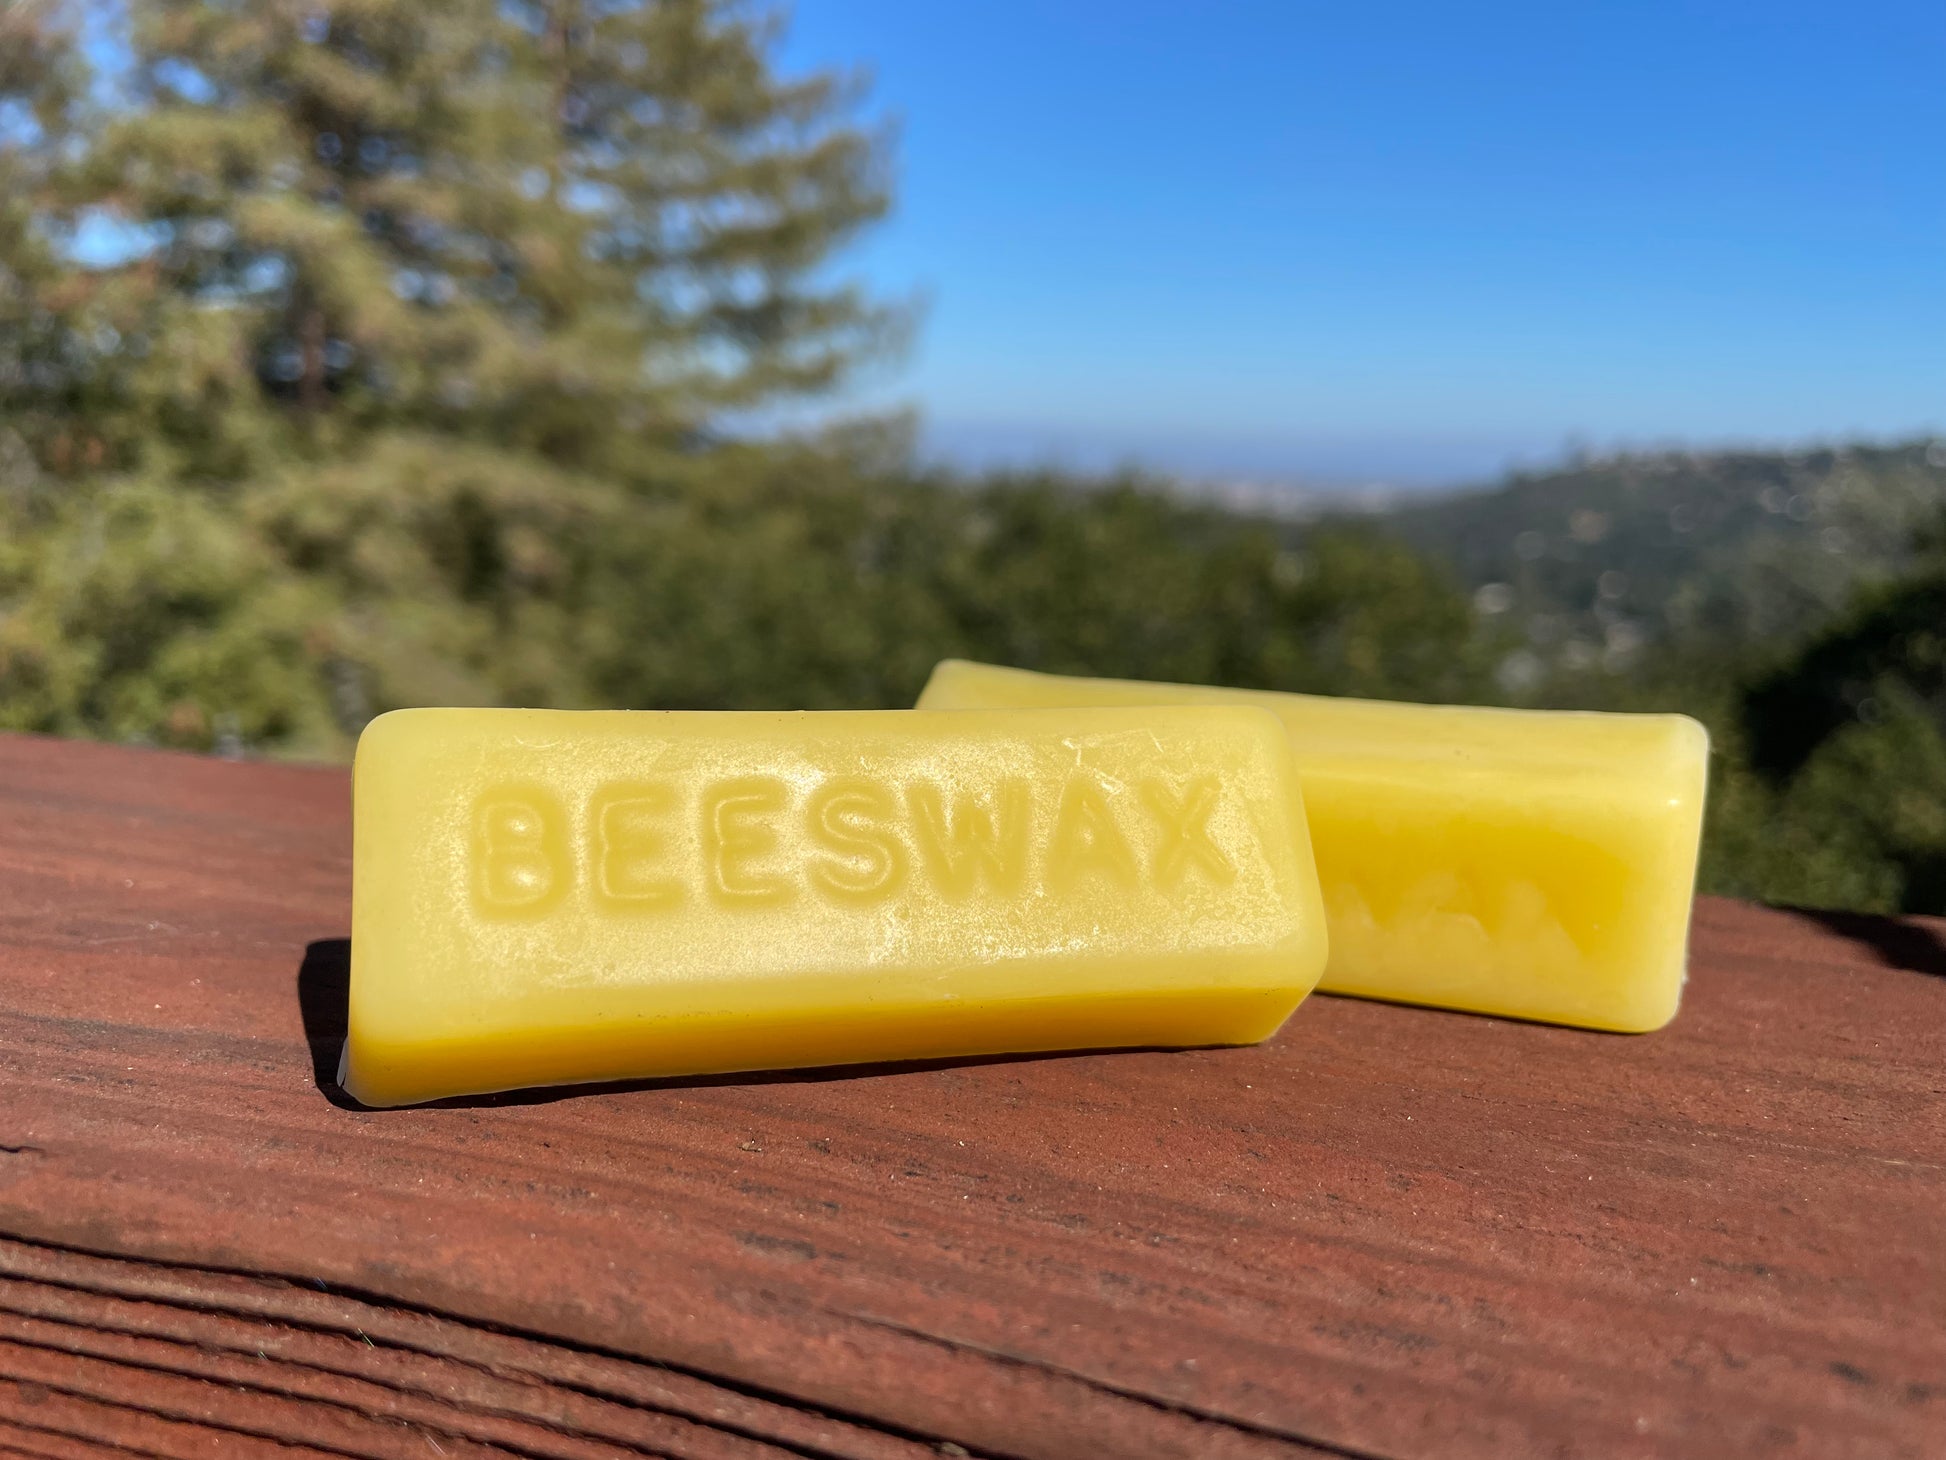 Beeswax Bar – The Herb Shoppe